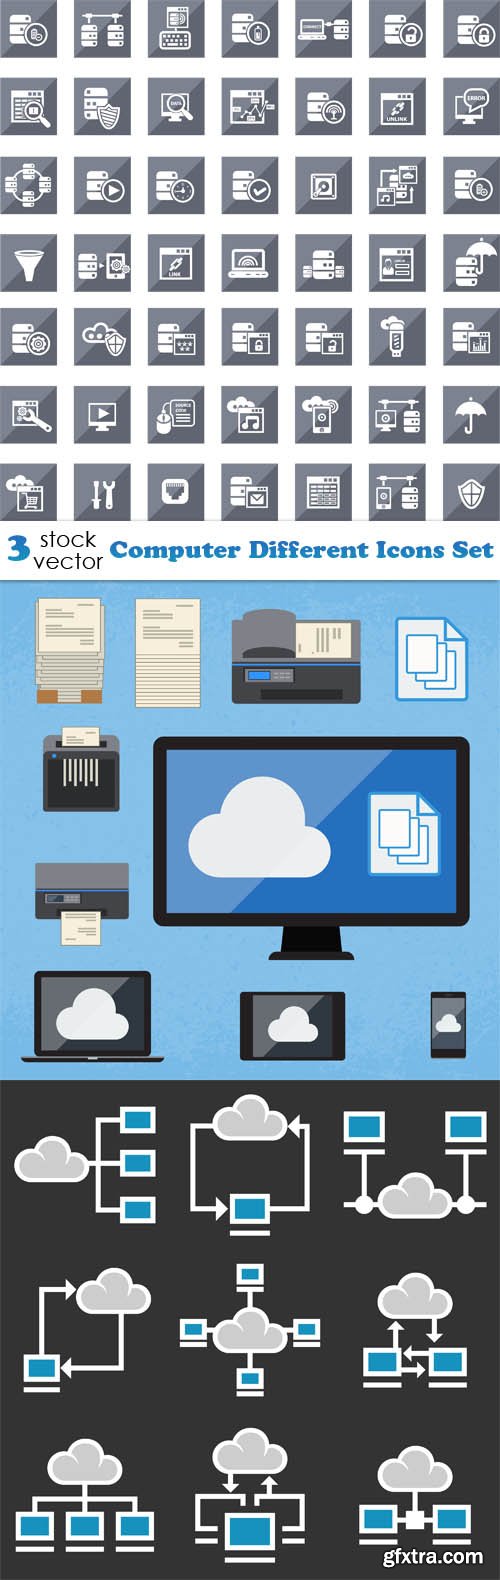 Vectors - Computer Different Icons Set